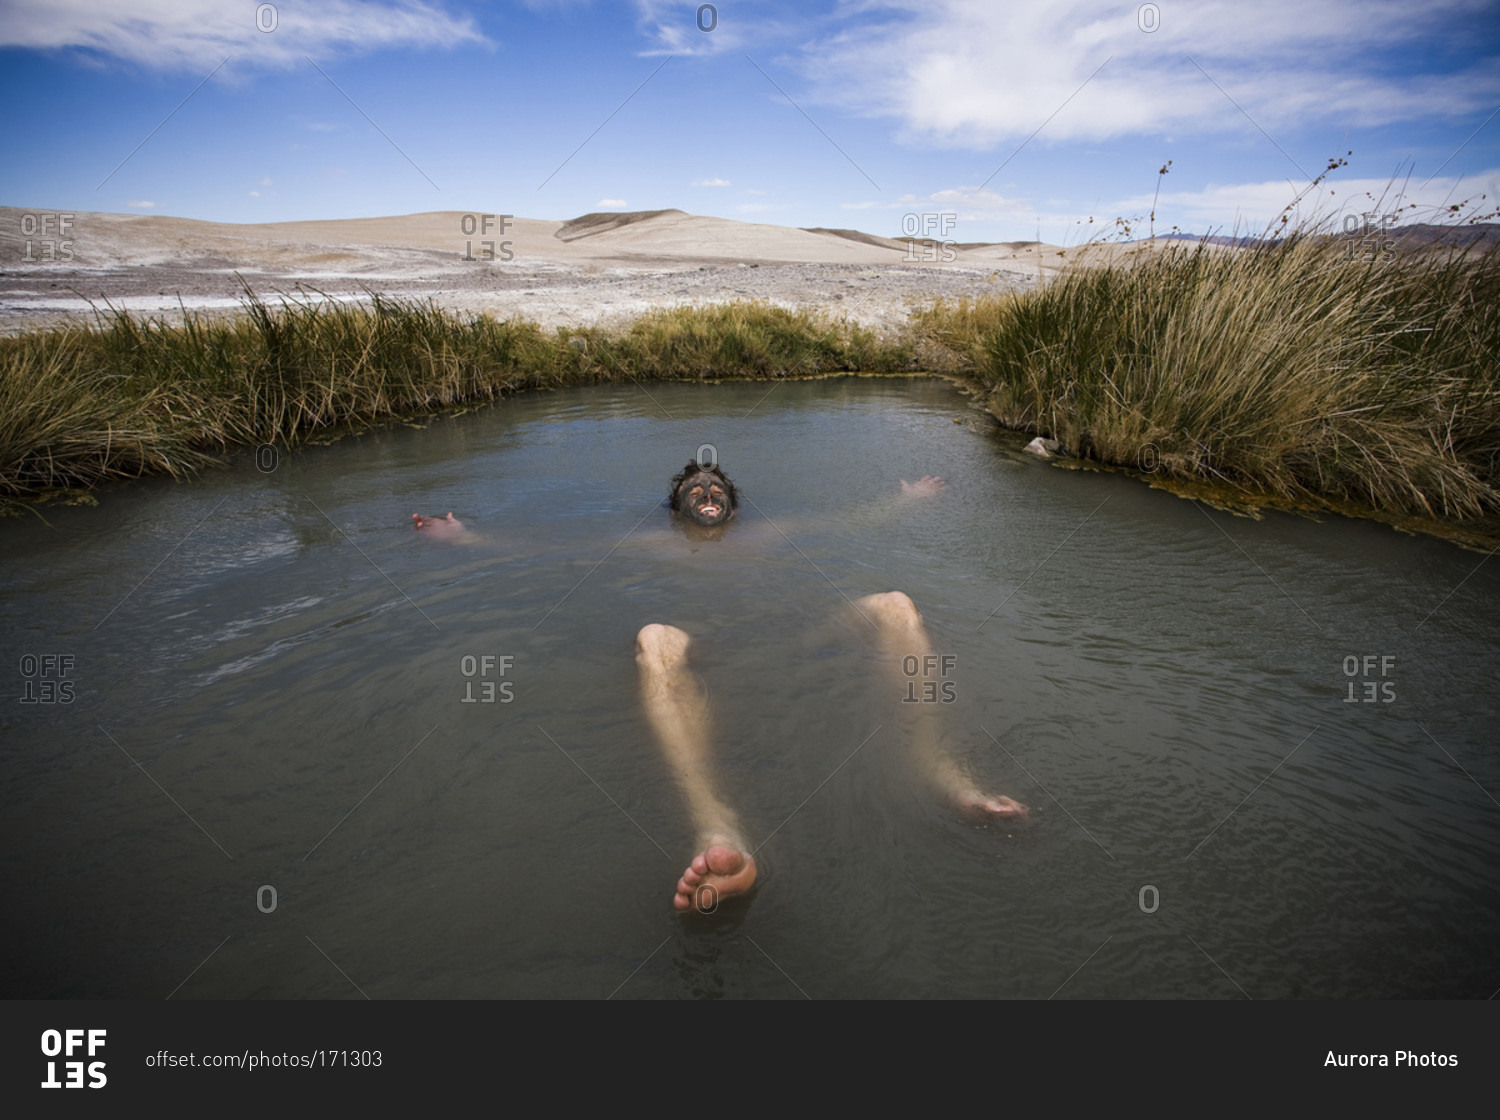 A man floats on his back in roadside hot springs in Tecopa